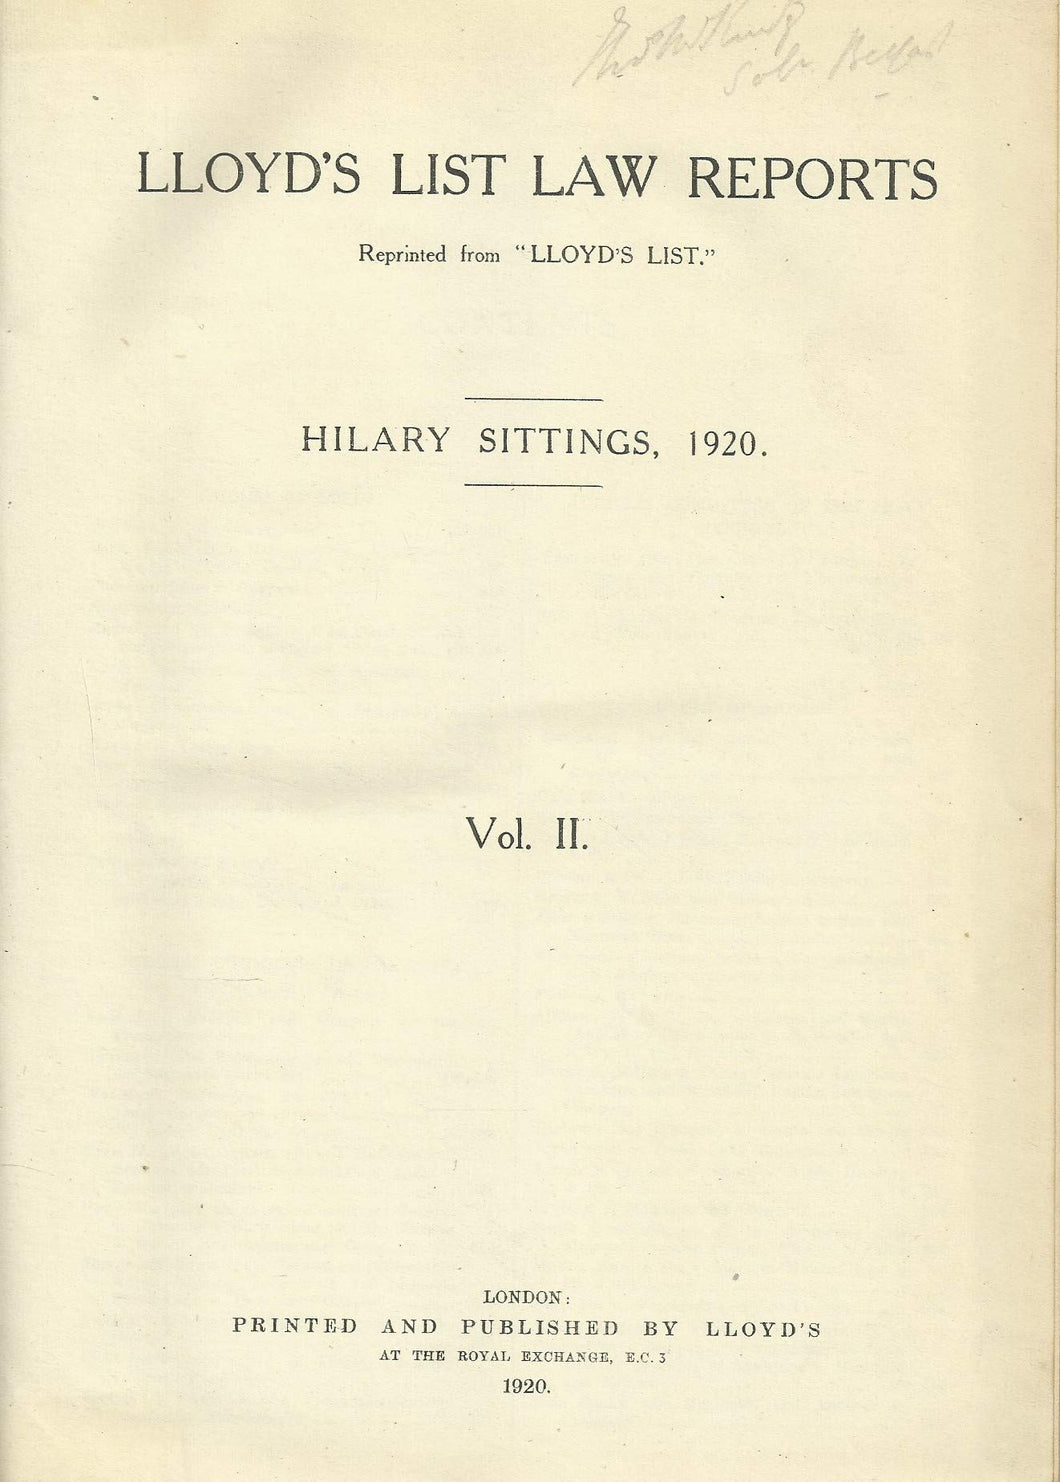 Lloyd's List Law Reports - Volume II (Volume 2), Hilary Sittings, 1920